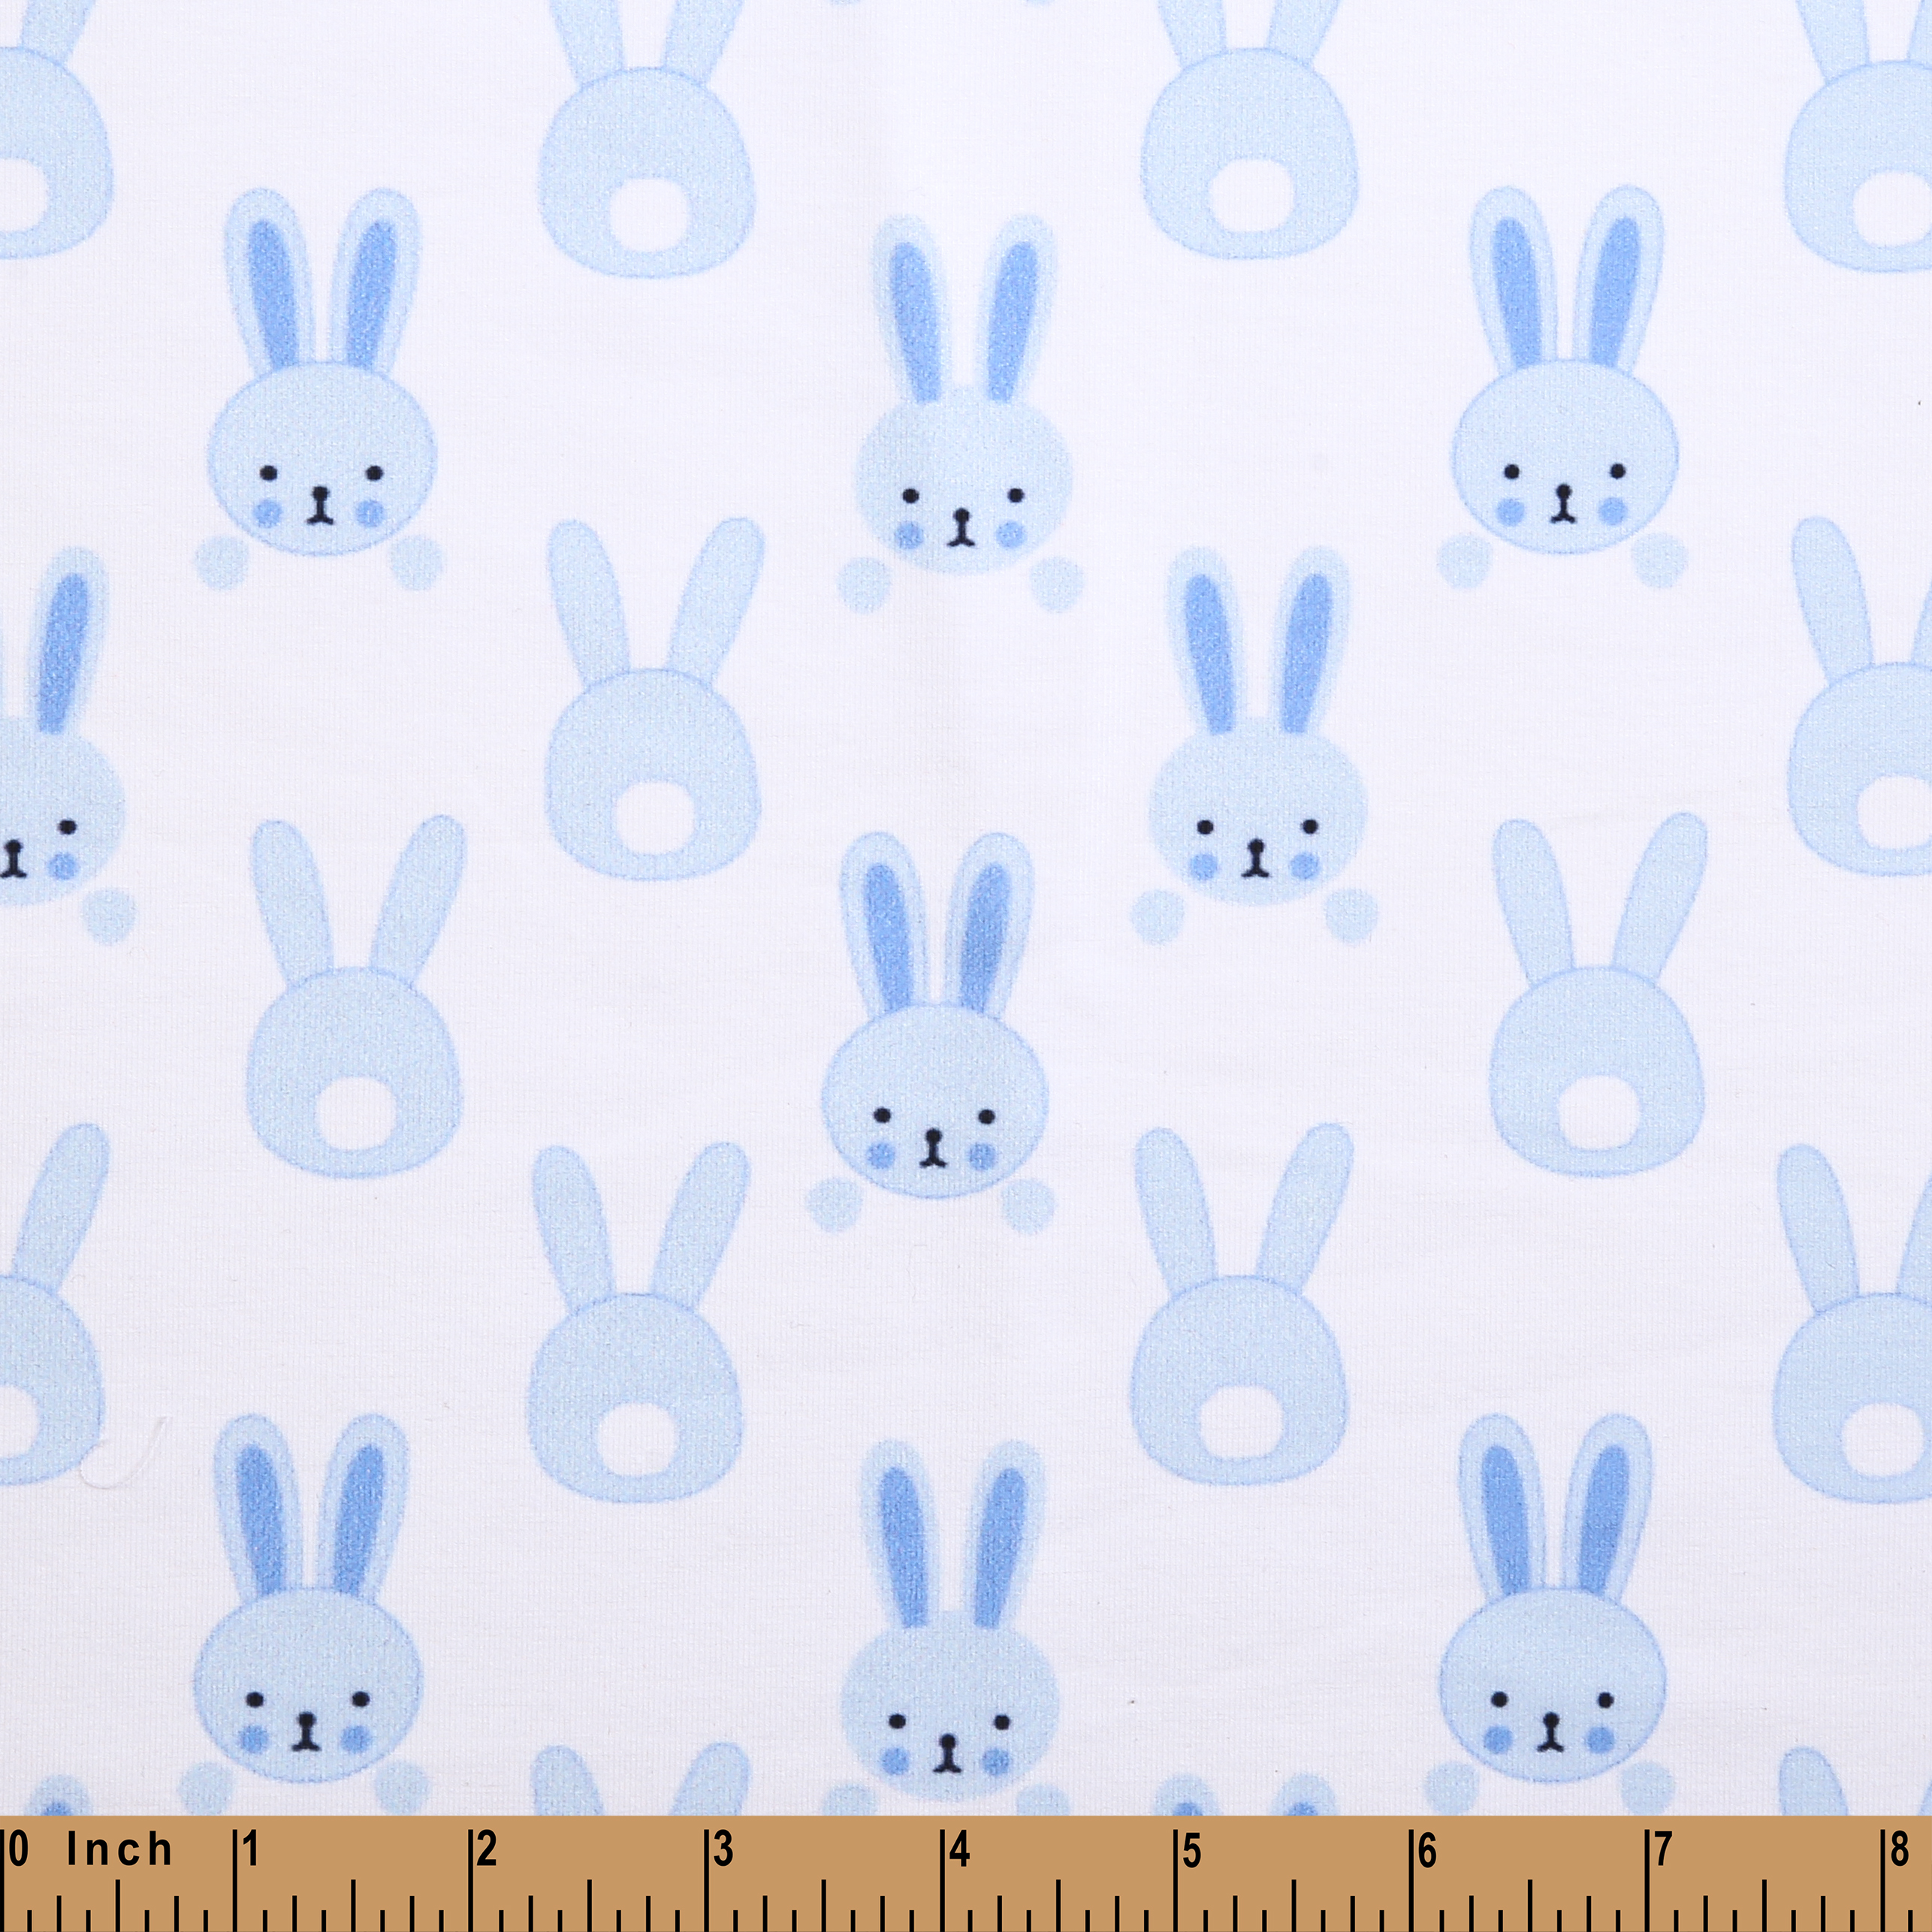 CD31- Blue bunny thick cardigan printing 4.0 fabric